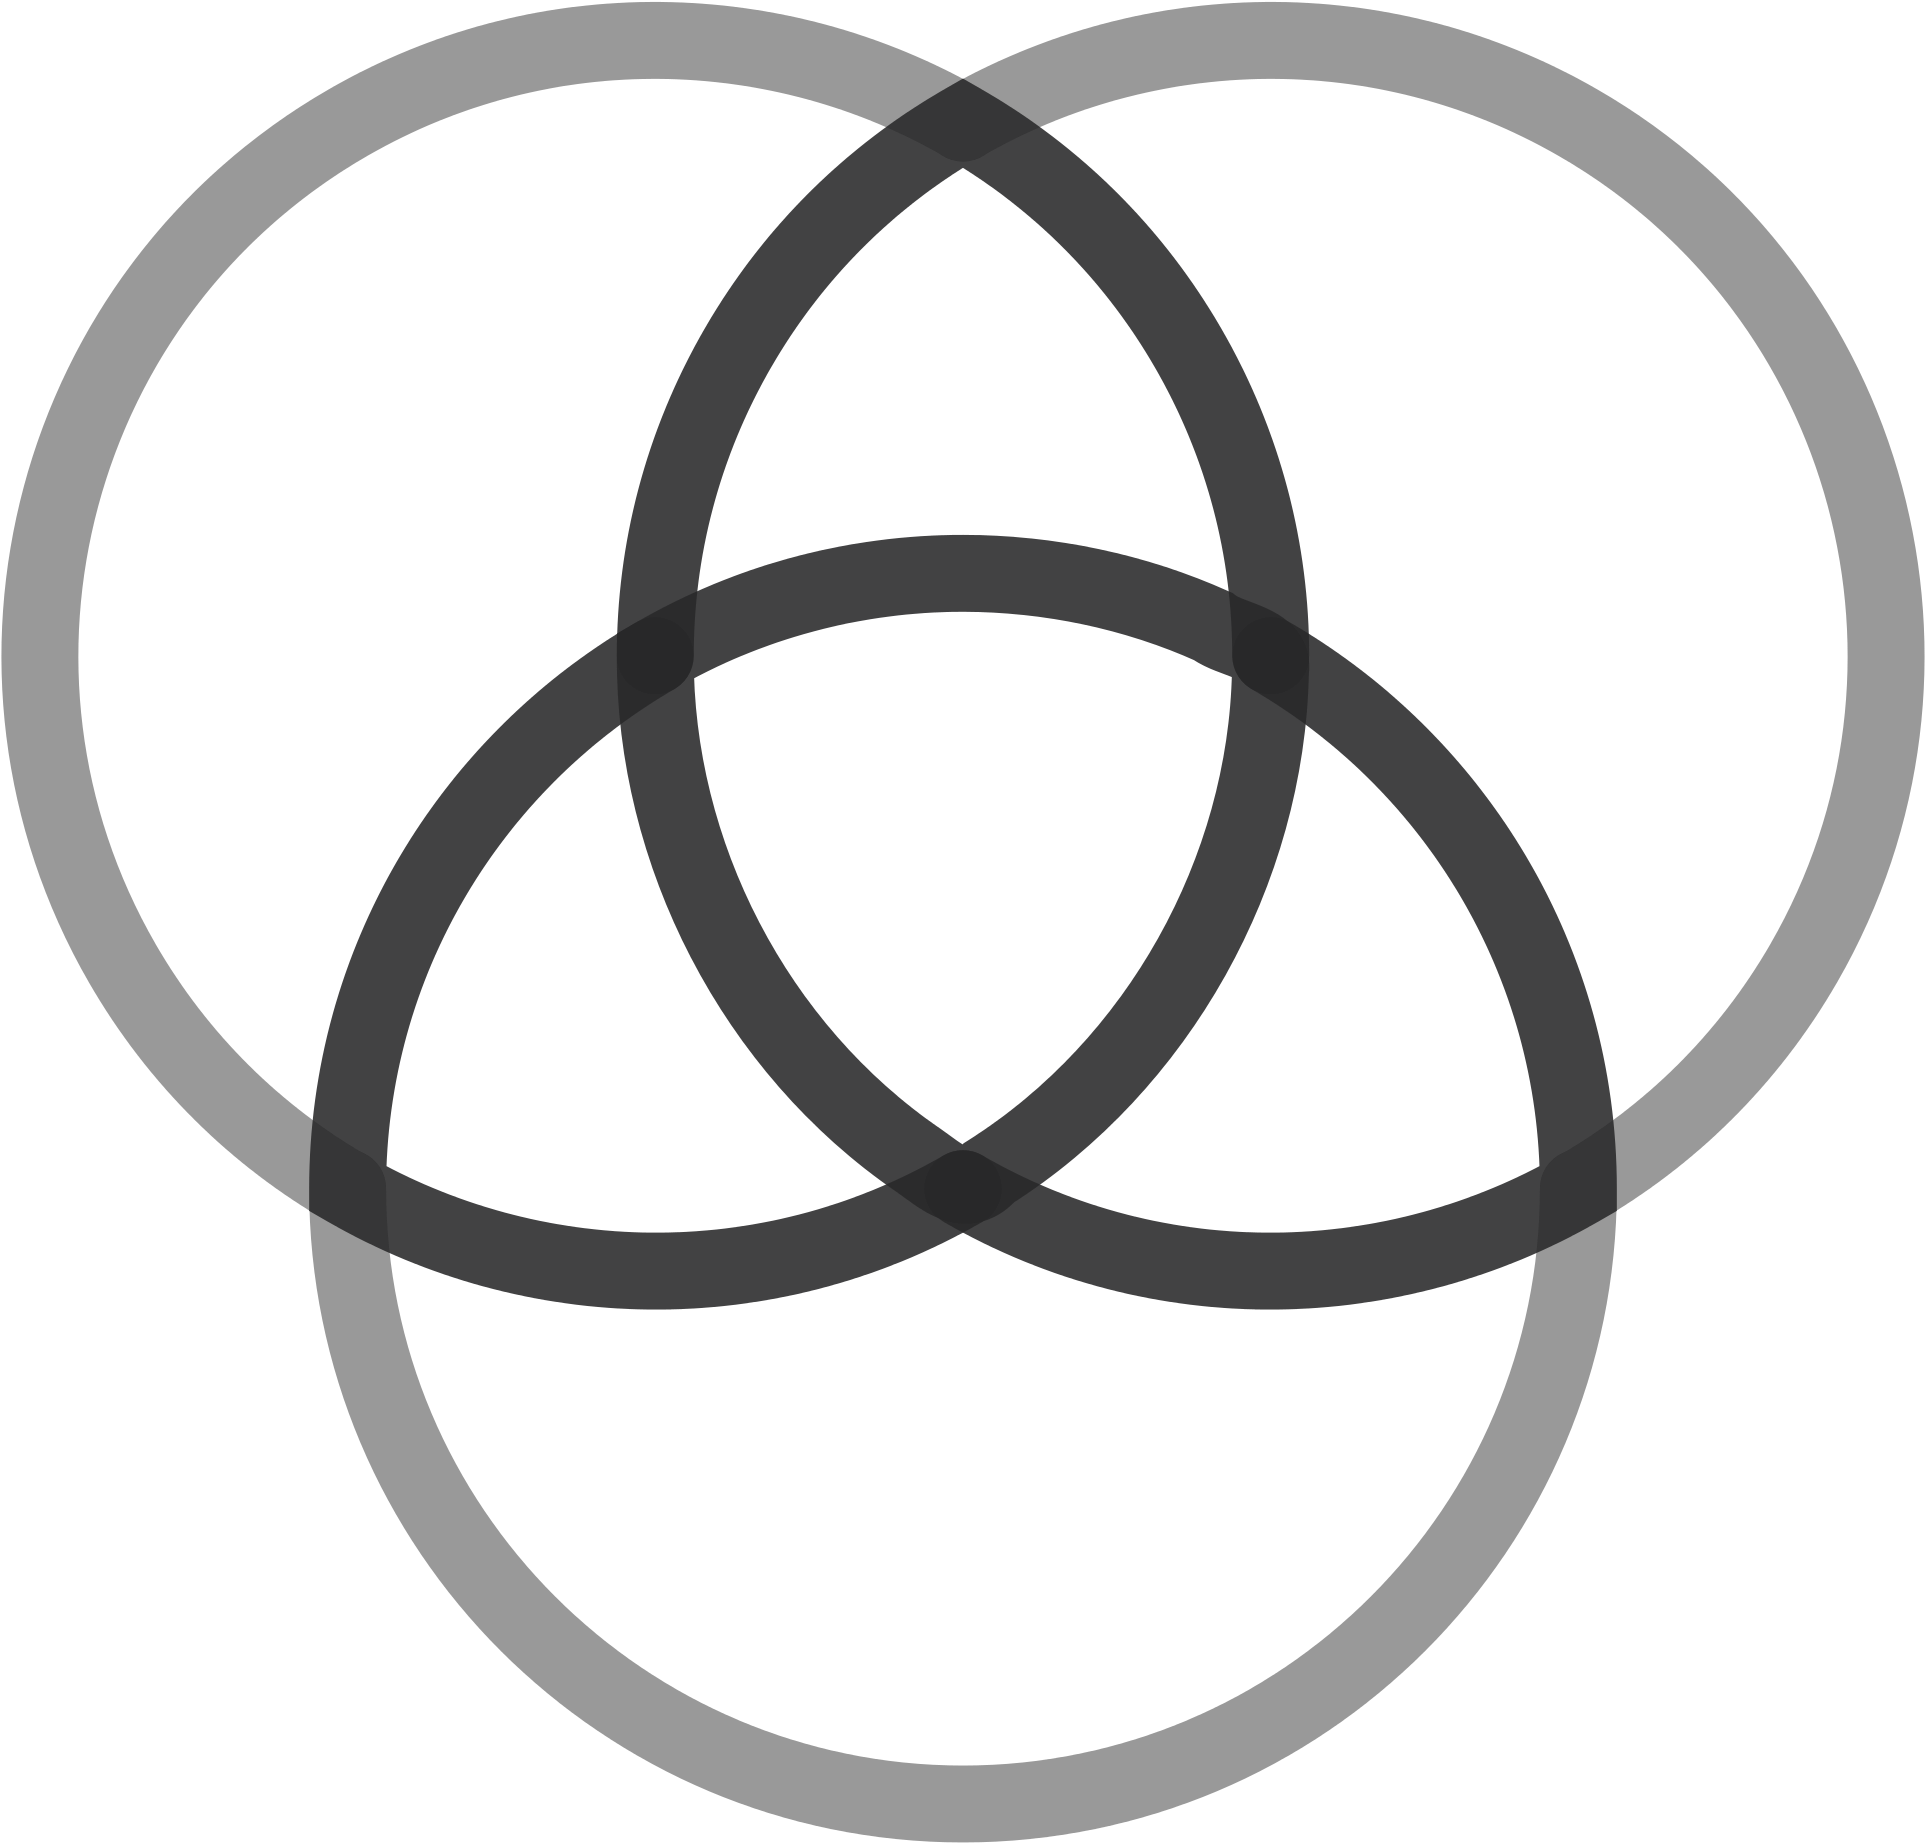 Holy Trinity Symbol Meaning Clipart - Circle Of Life Symbols (2000x1926)